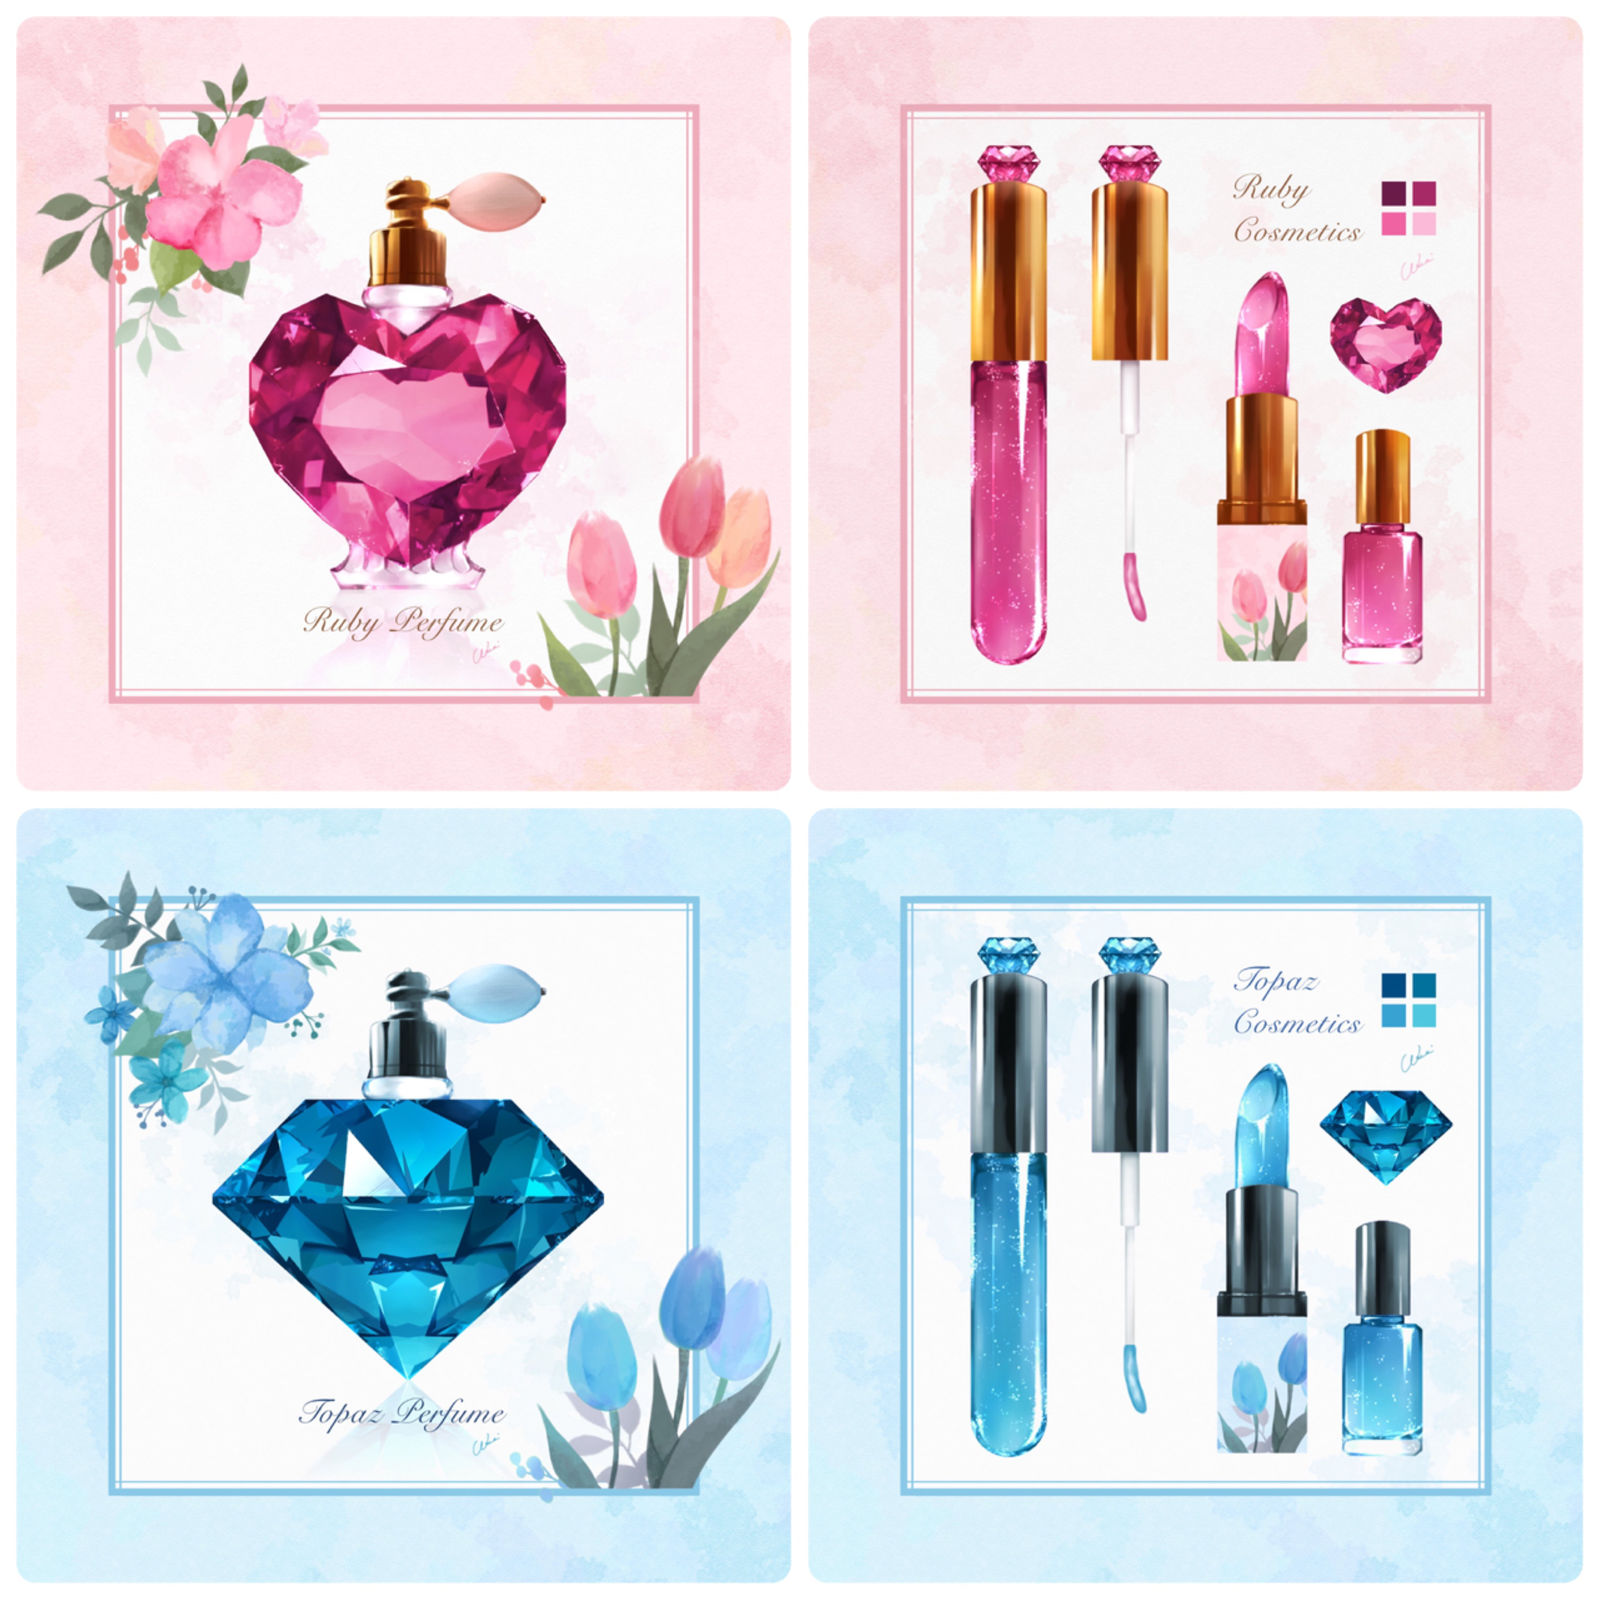 Perfume&Cosmetics 插画图片壁纸